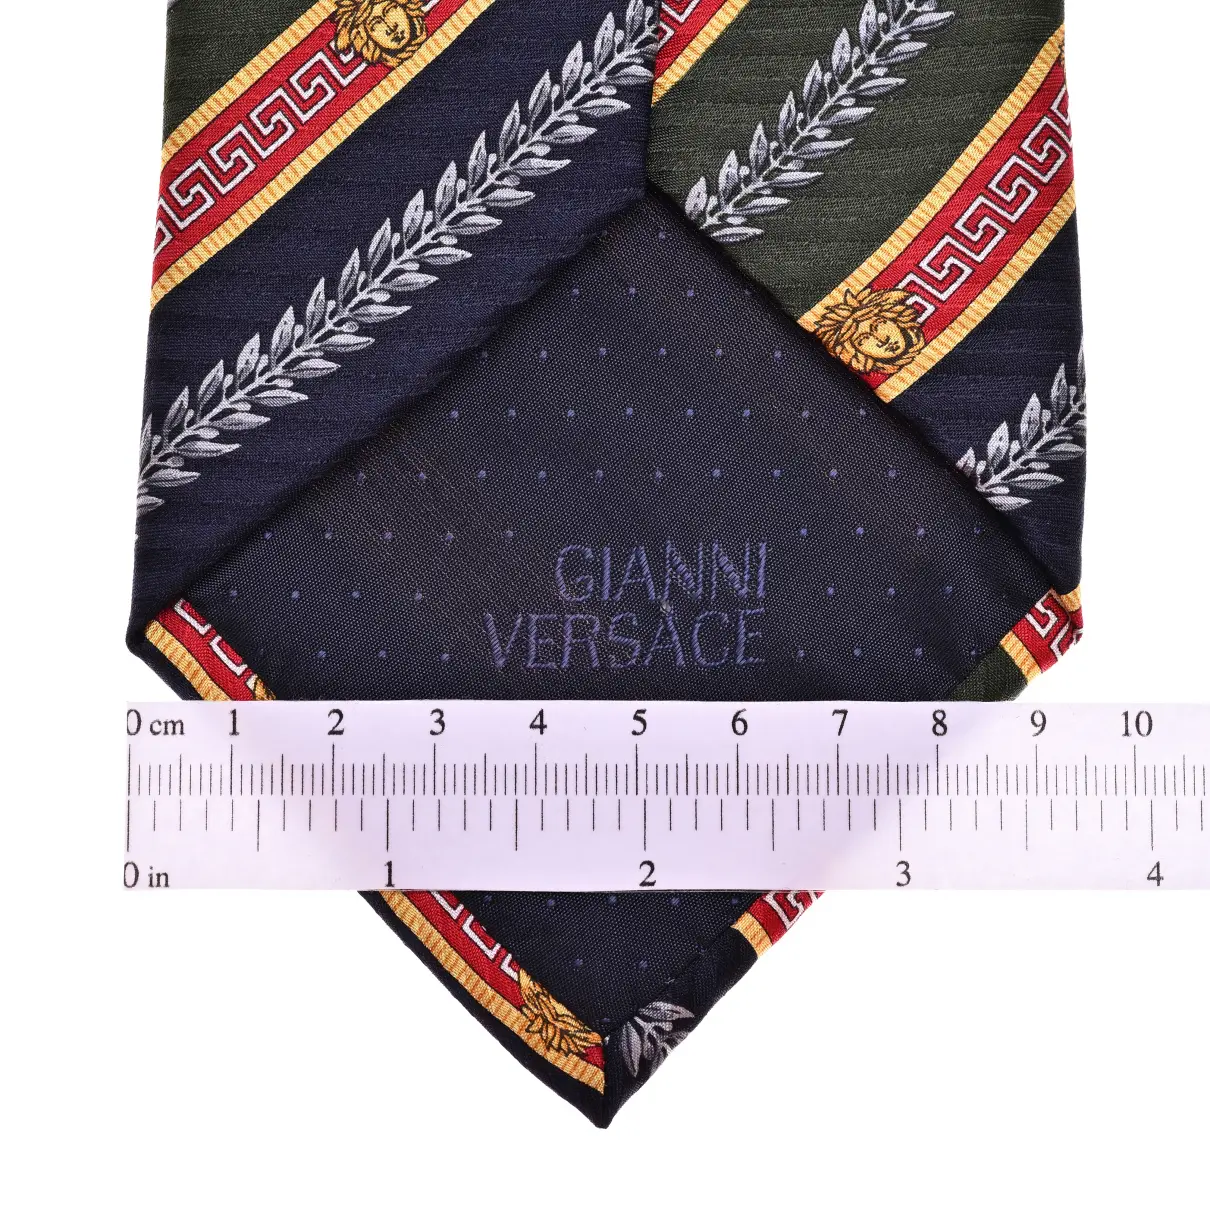 Buy Gianni Versace Silk tie online - Vintage